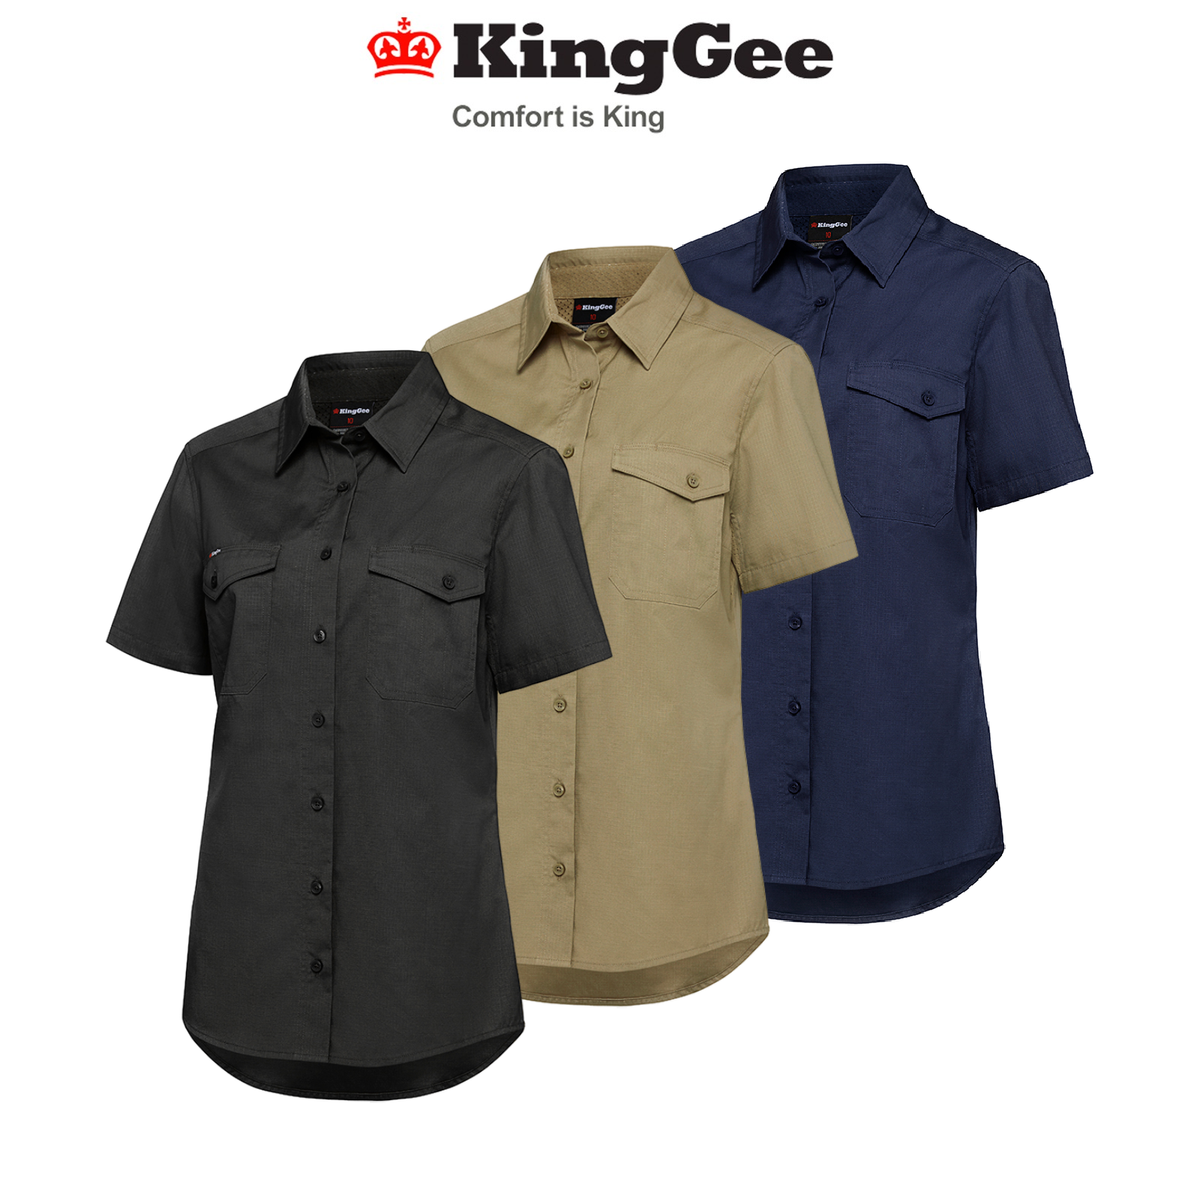 KingGee Womens Workcool 2 Shirt Short Sleeve Lightweight Breathable Work K44205